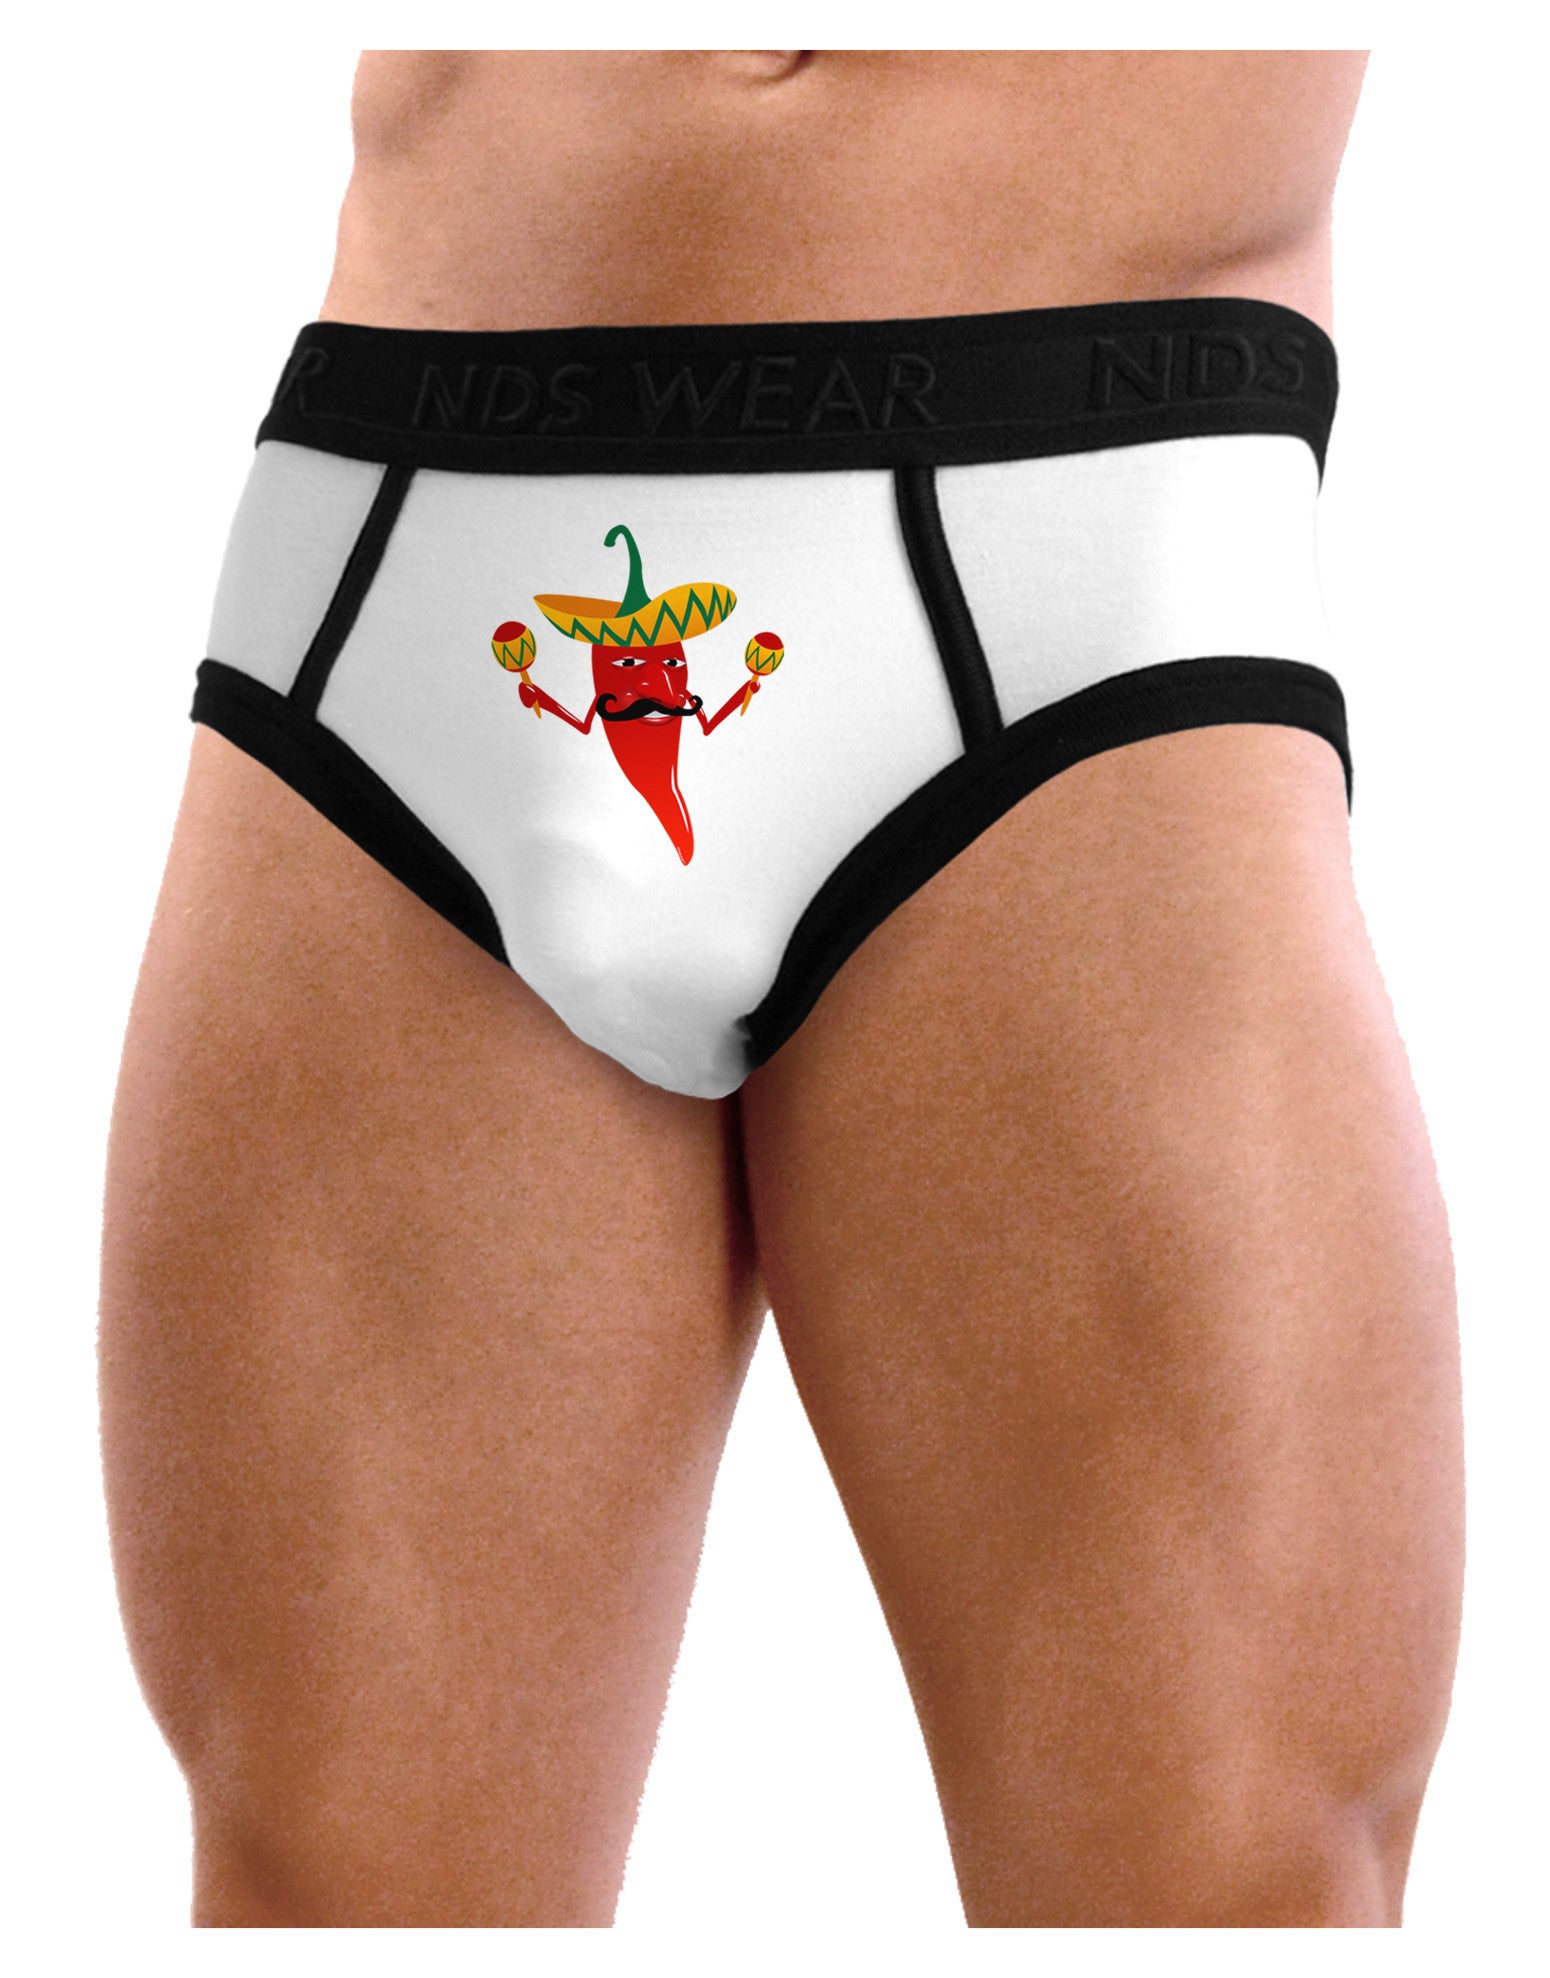 Hot Mama Chili Pepper Mens NDS Wear Boxer Brief Underwear - Davson